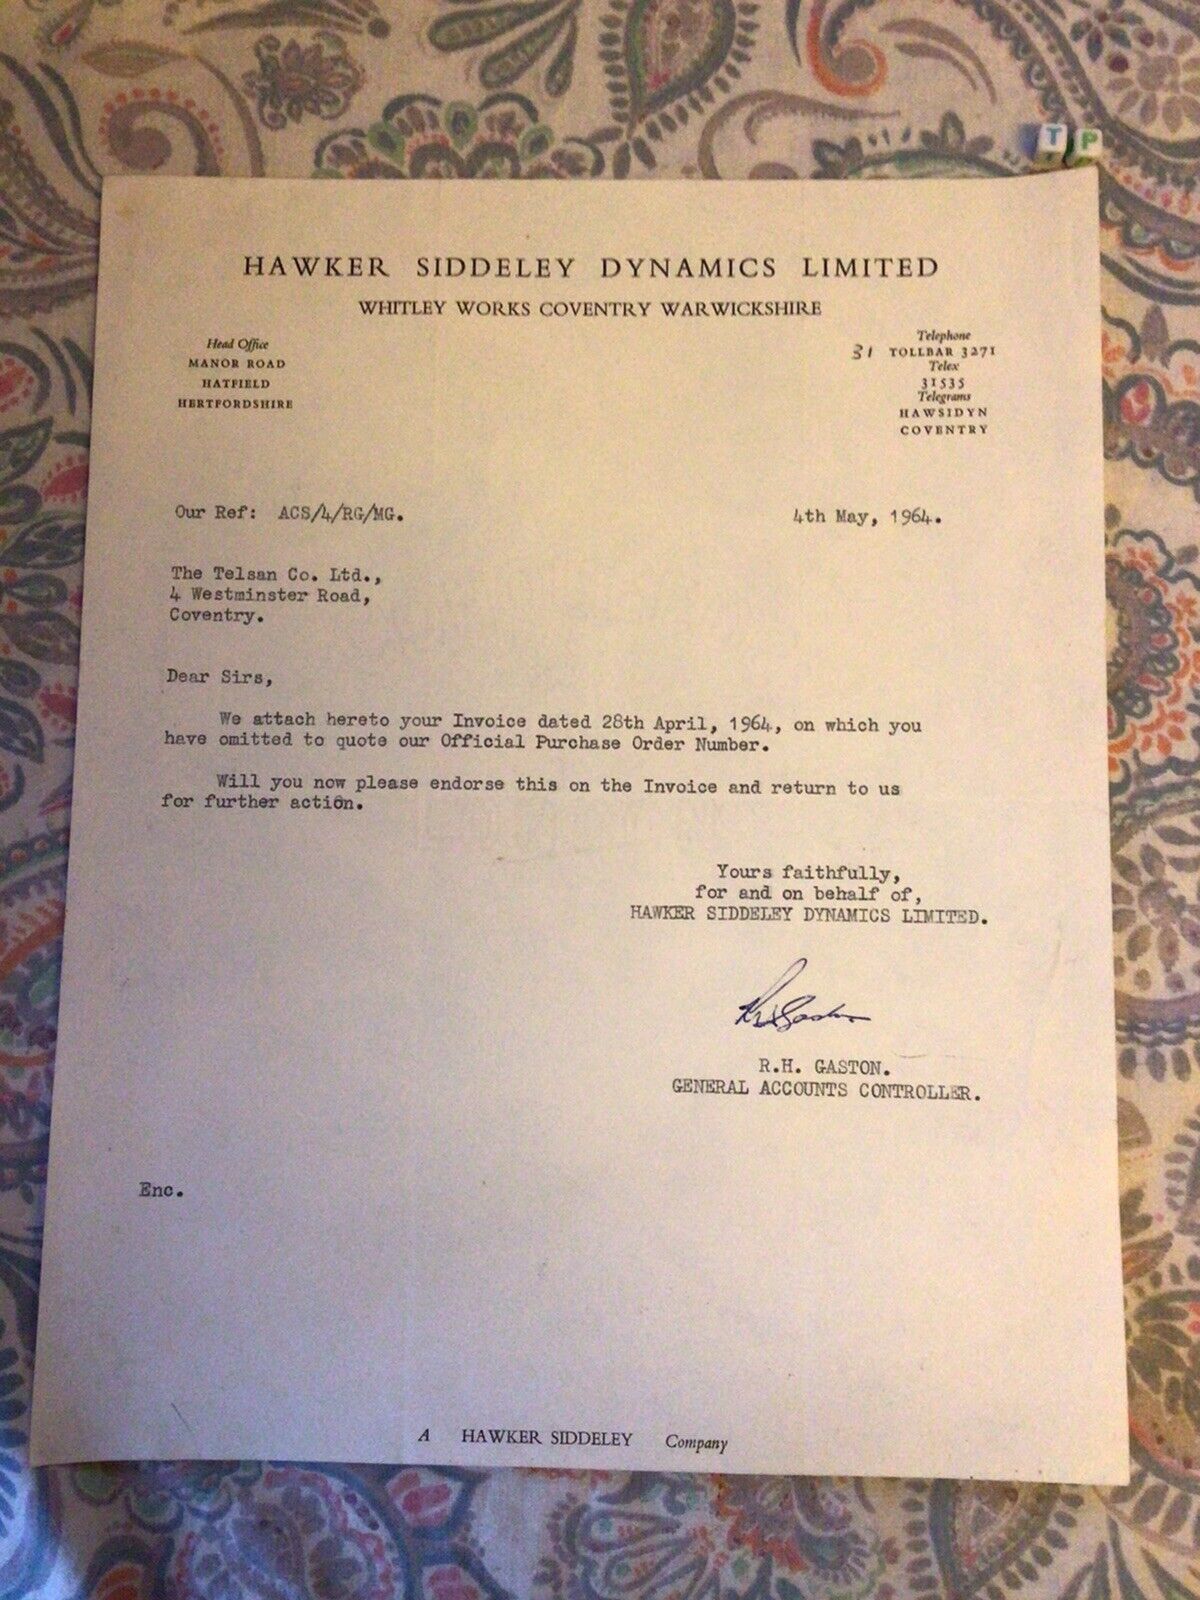 Rare 1964 letter Hawker Siddeley Aeronautics, Regarding A New Invention